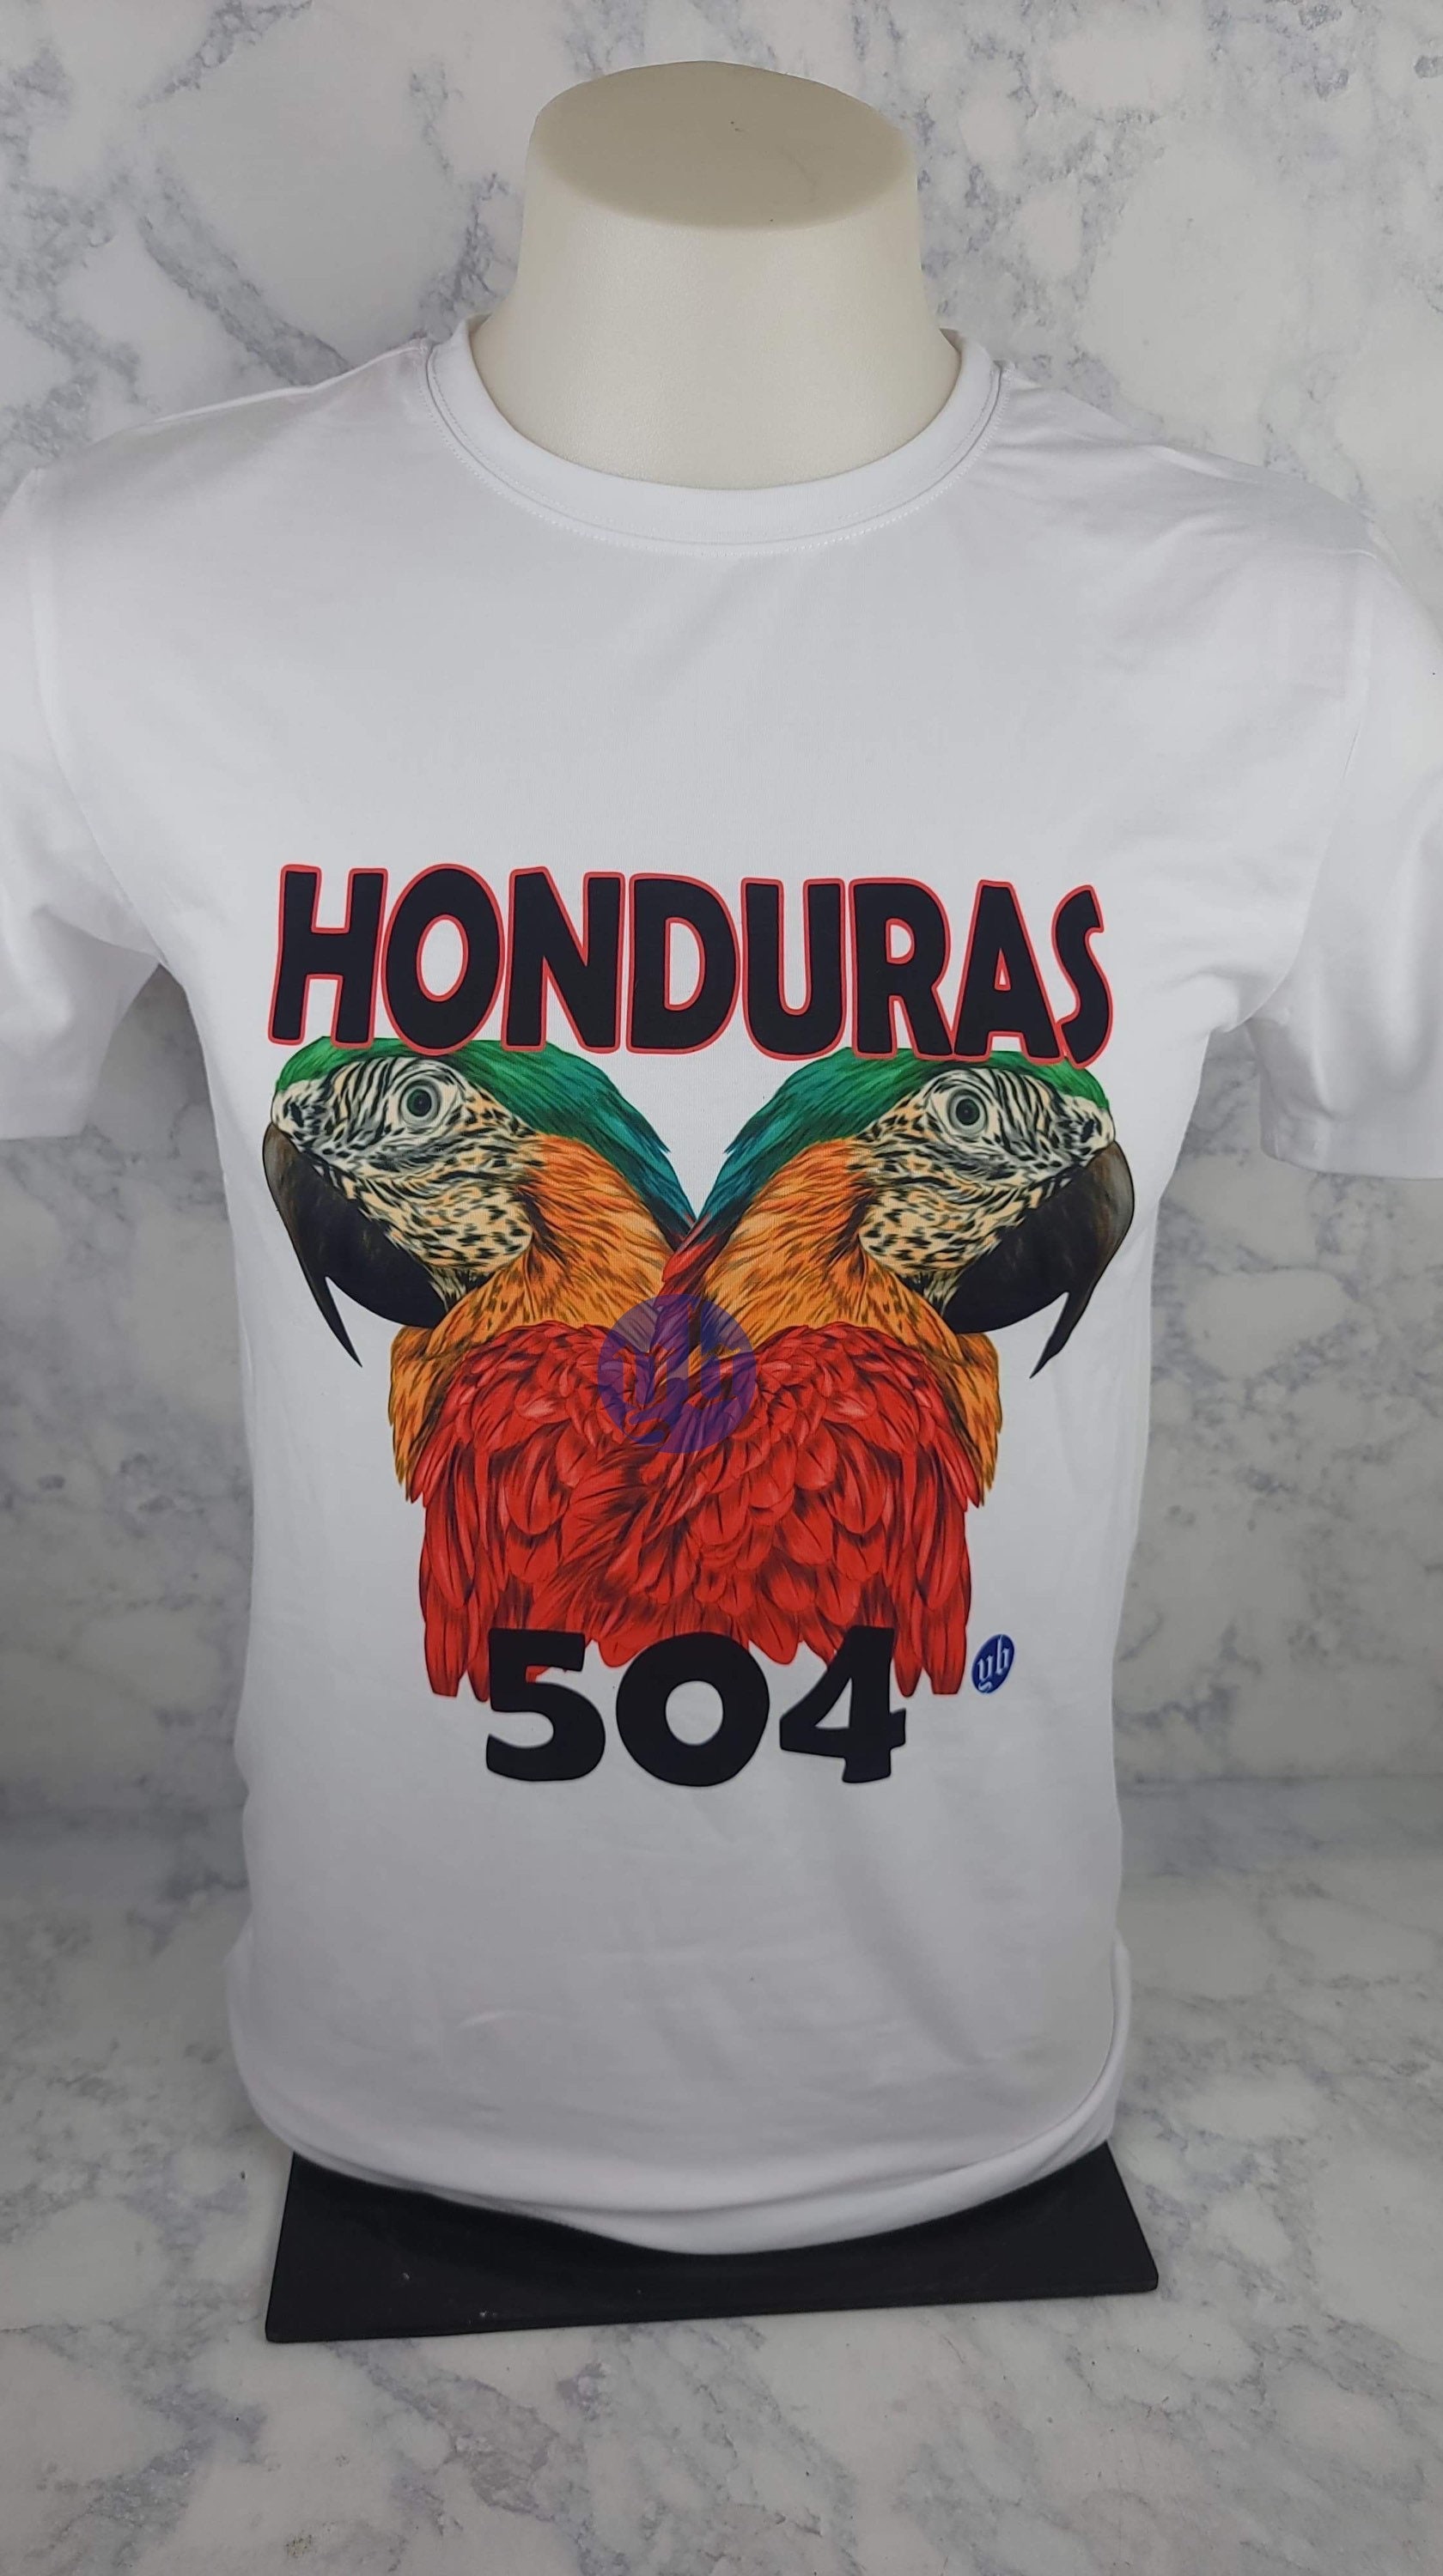 Las Guacamayas Honduras 504 Camisas T-shirts Catracha photo